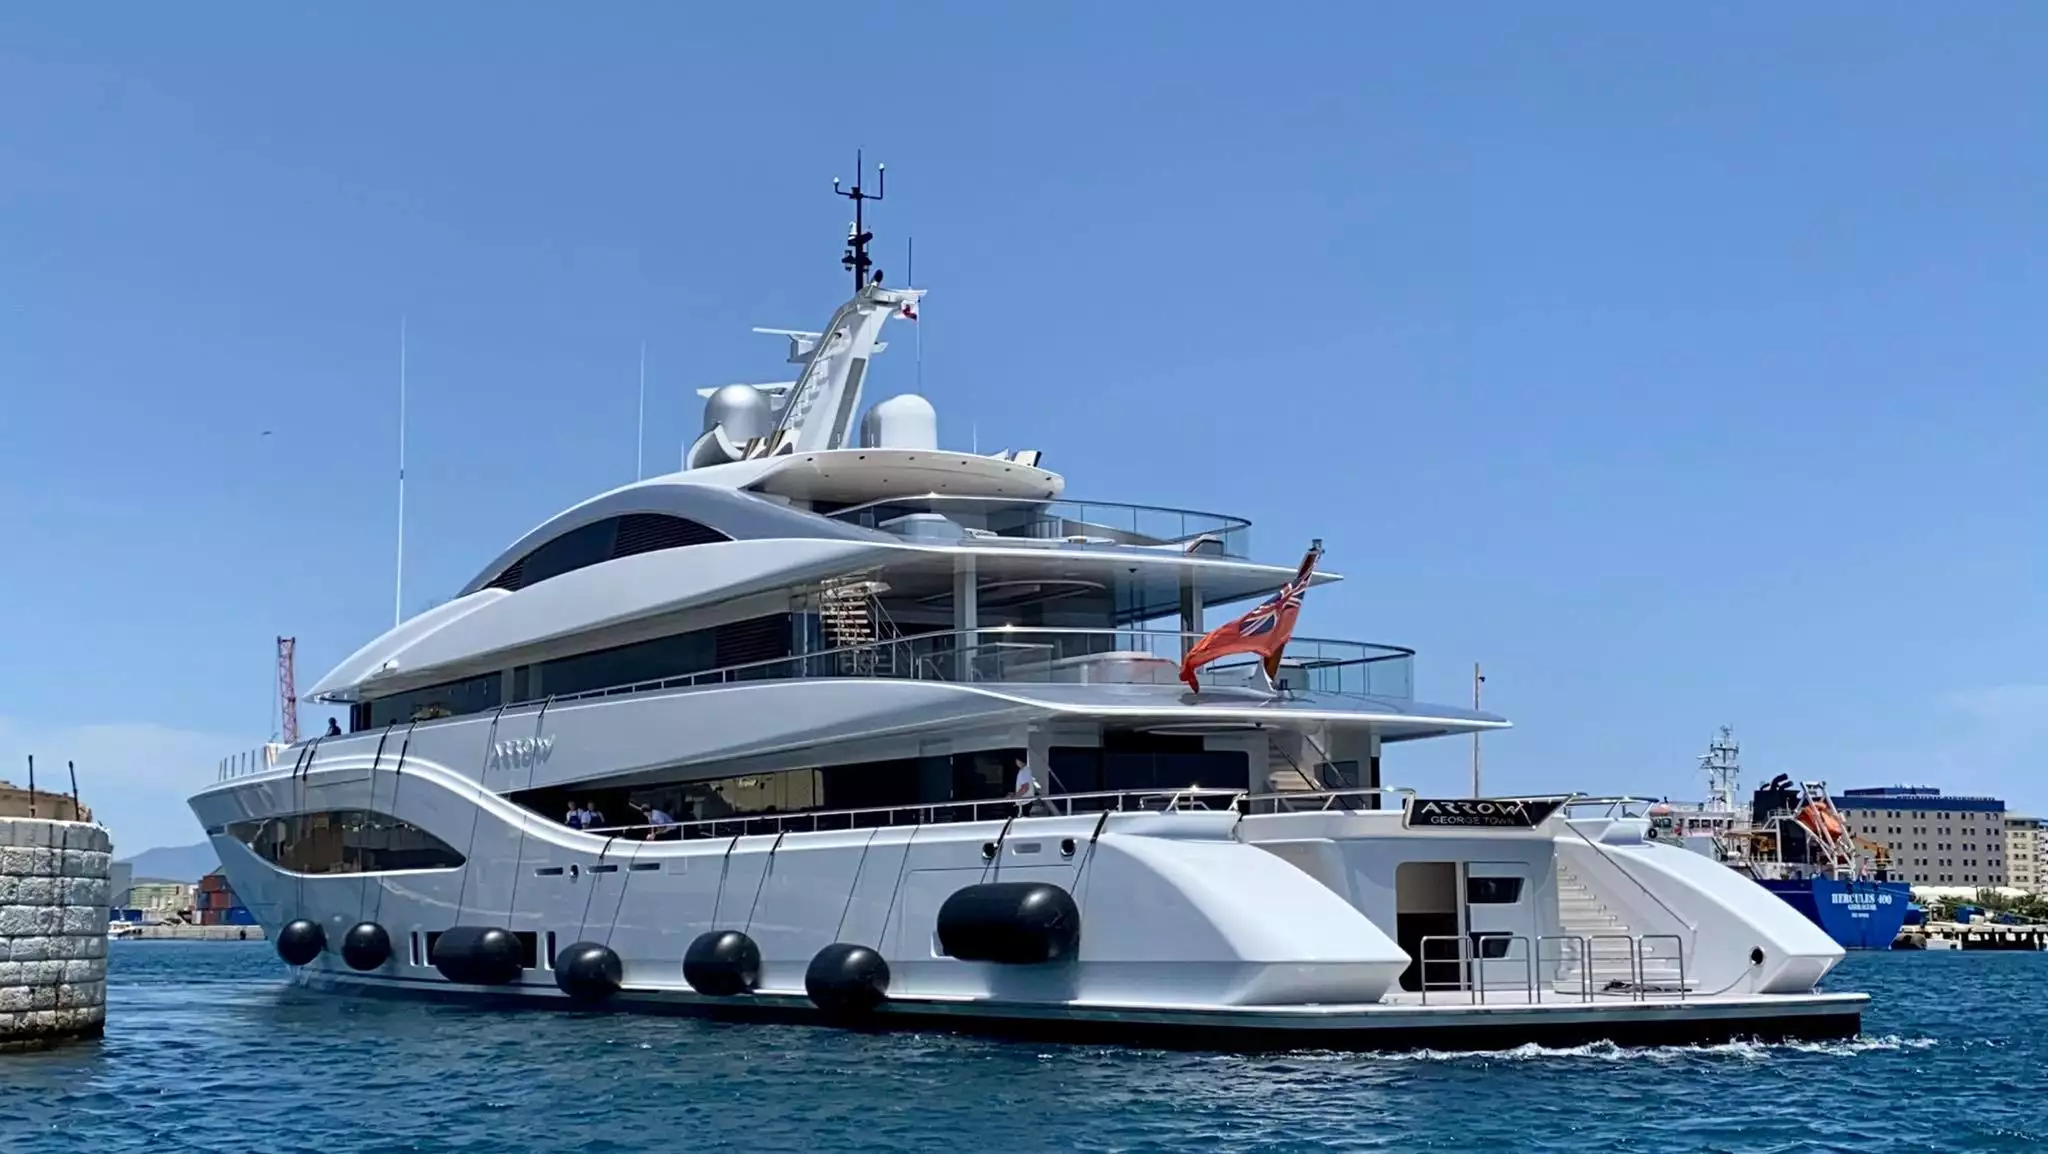 ARROW Yacht • Feadship • 2020 • владелец Майкл Платт 